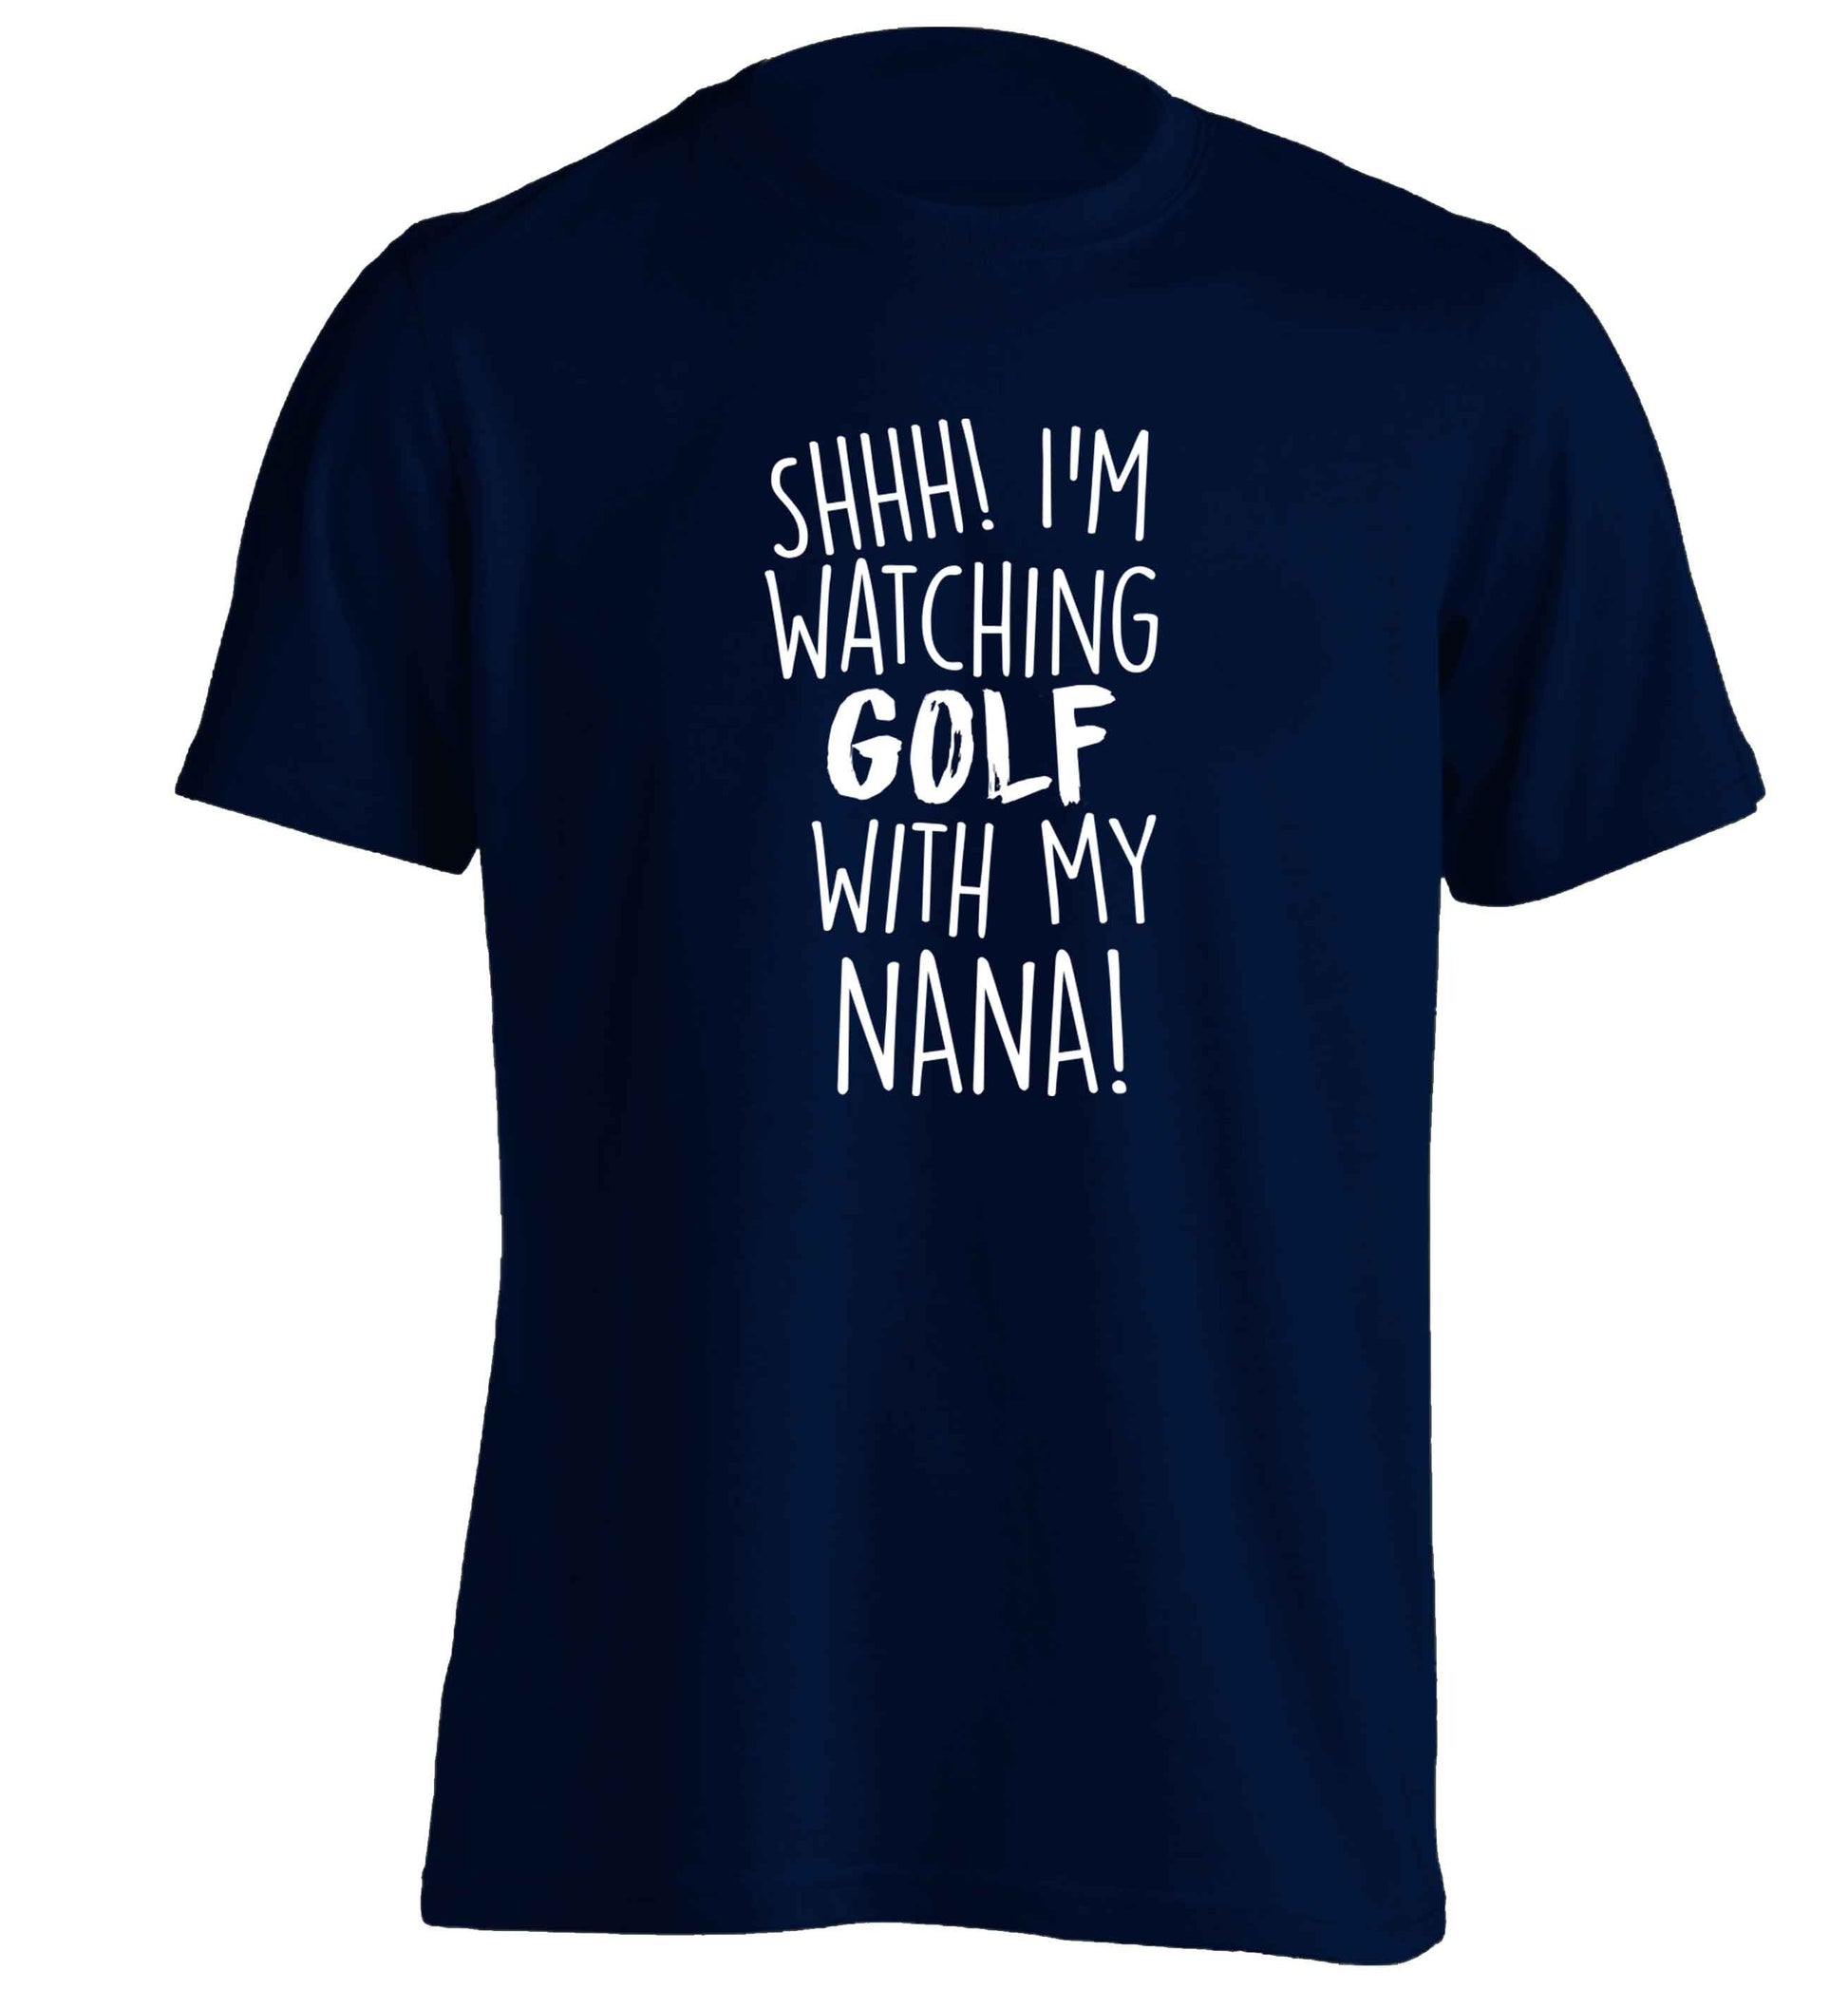 Shh I'm watching golf with my nana adults unisex navy Tshirt 2XL